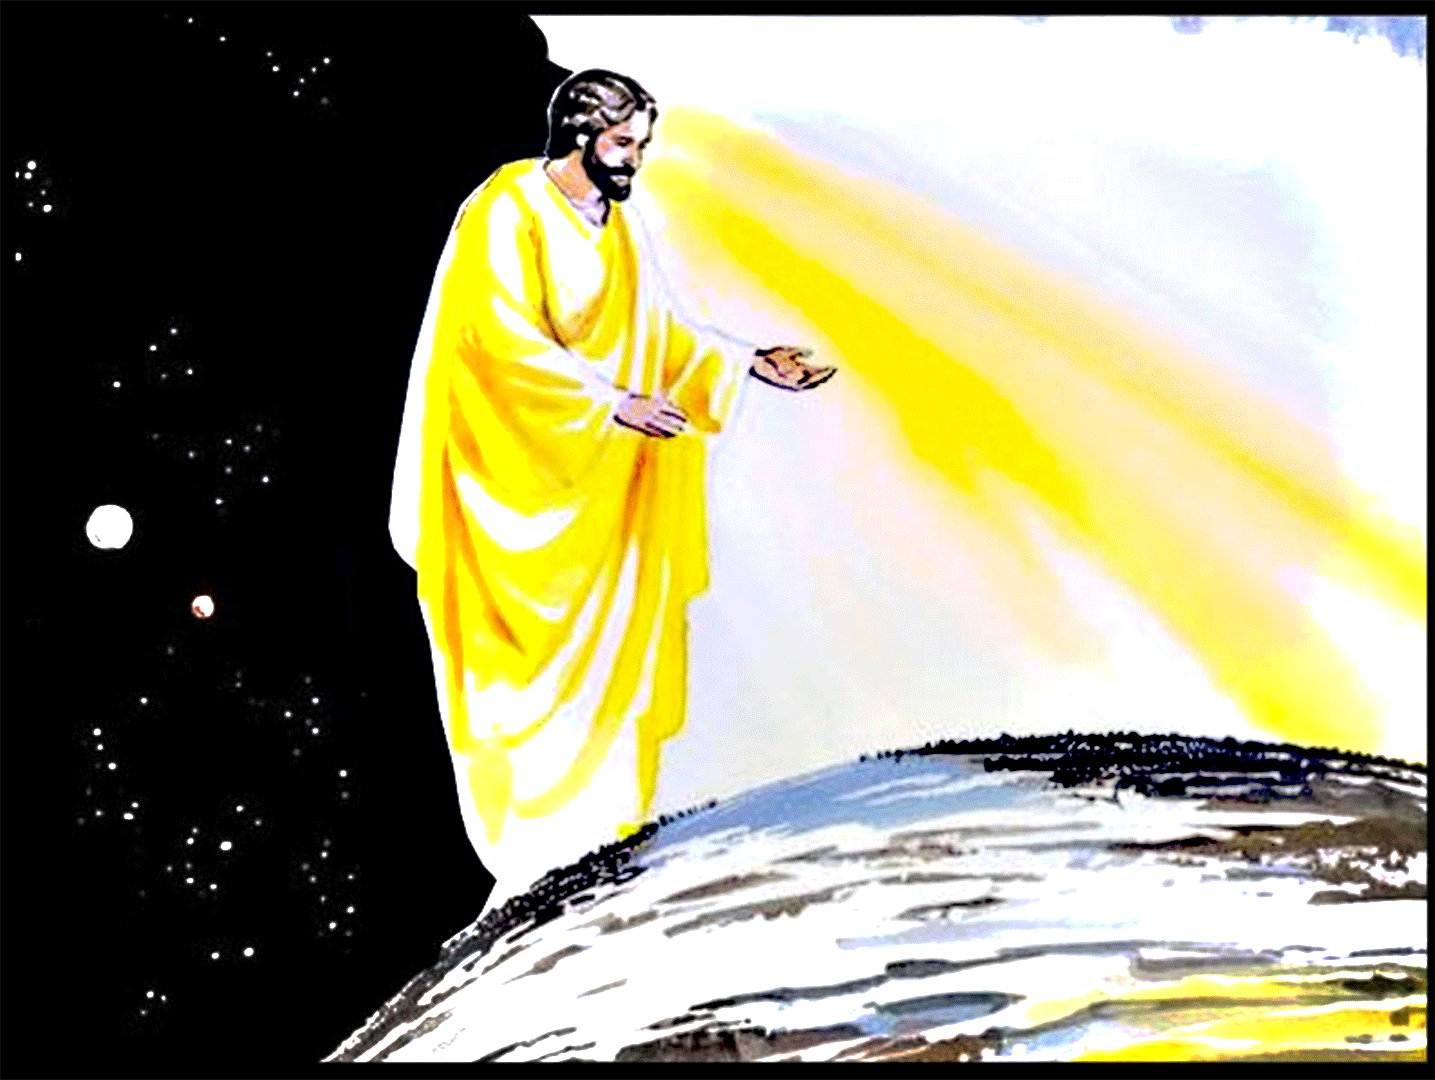 Jesus standing on edge of world